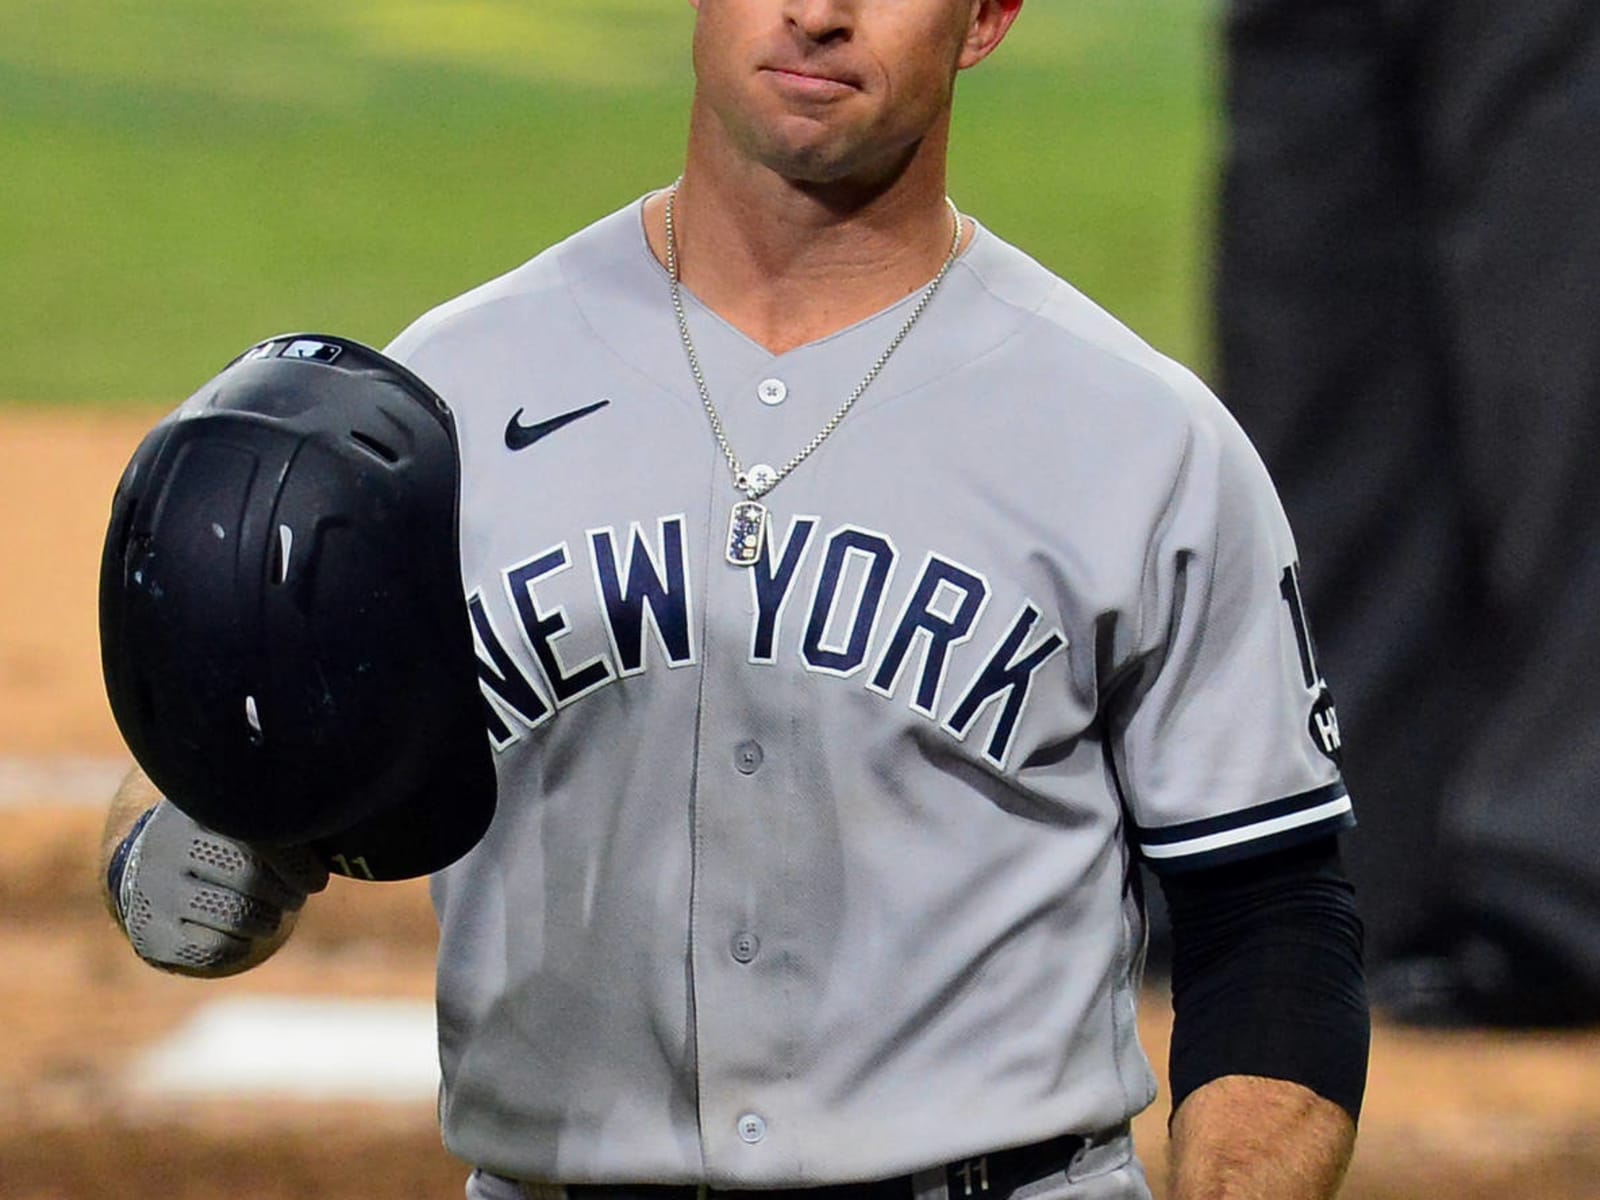 Brett Gardner isn't thinking Yankees future amid stretch run